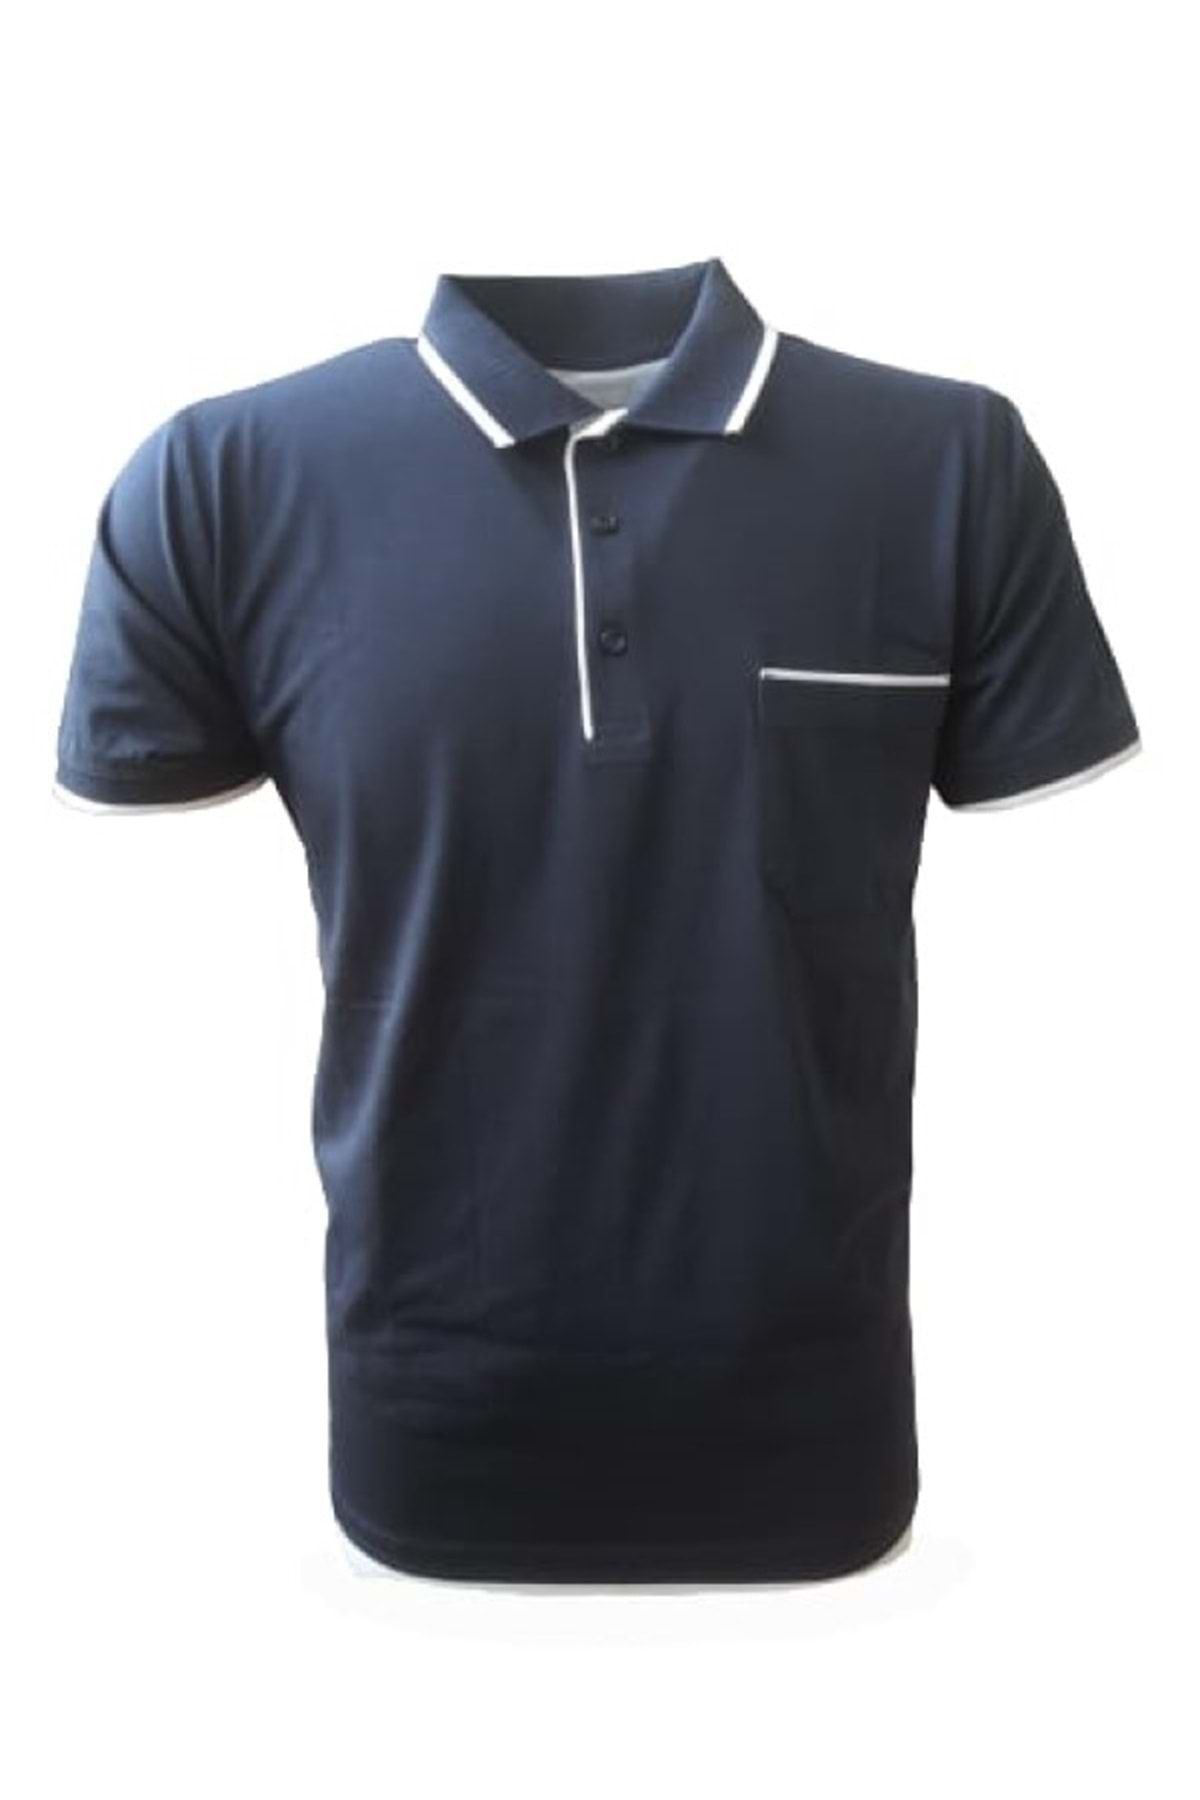 Rey Polo Erkek Basic Polo Yaka Kısa Kol T-shirt 430 - Lacivert - Xxl